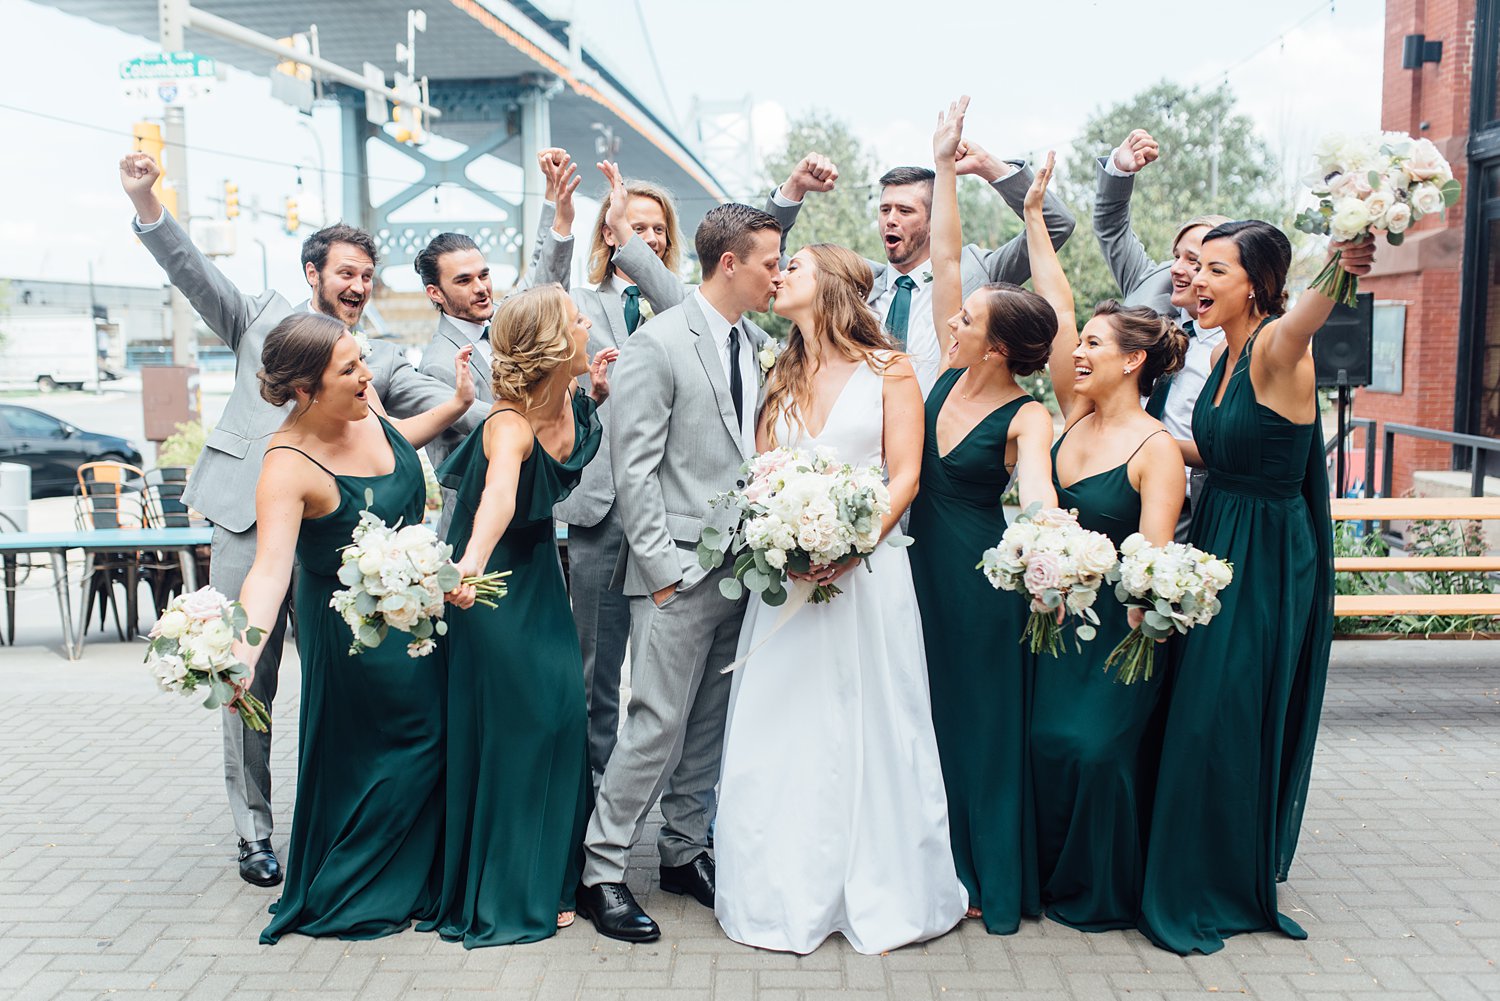 Jen + Tyler - Race Street Pier La Peg Wedding - Philadelphia Wedding Photographer - Alison Dunn Photography photo